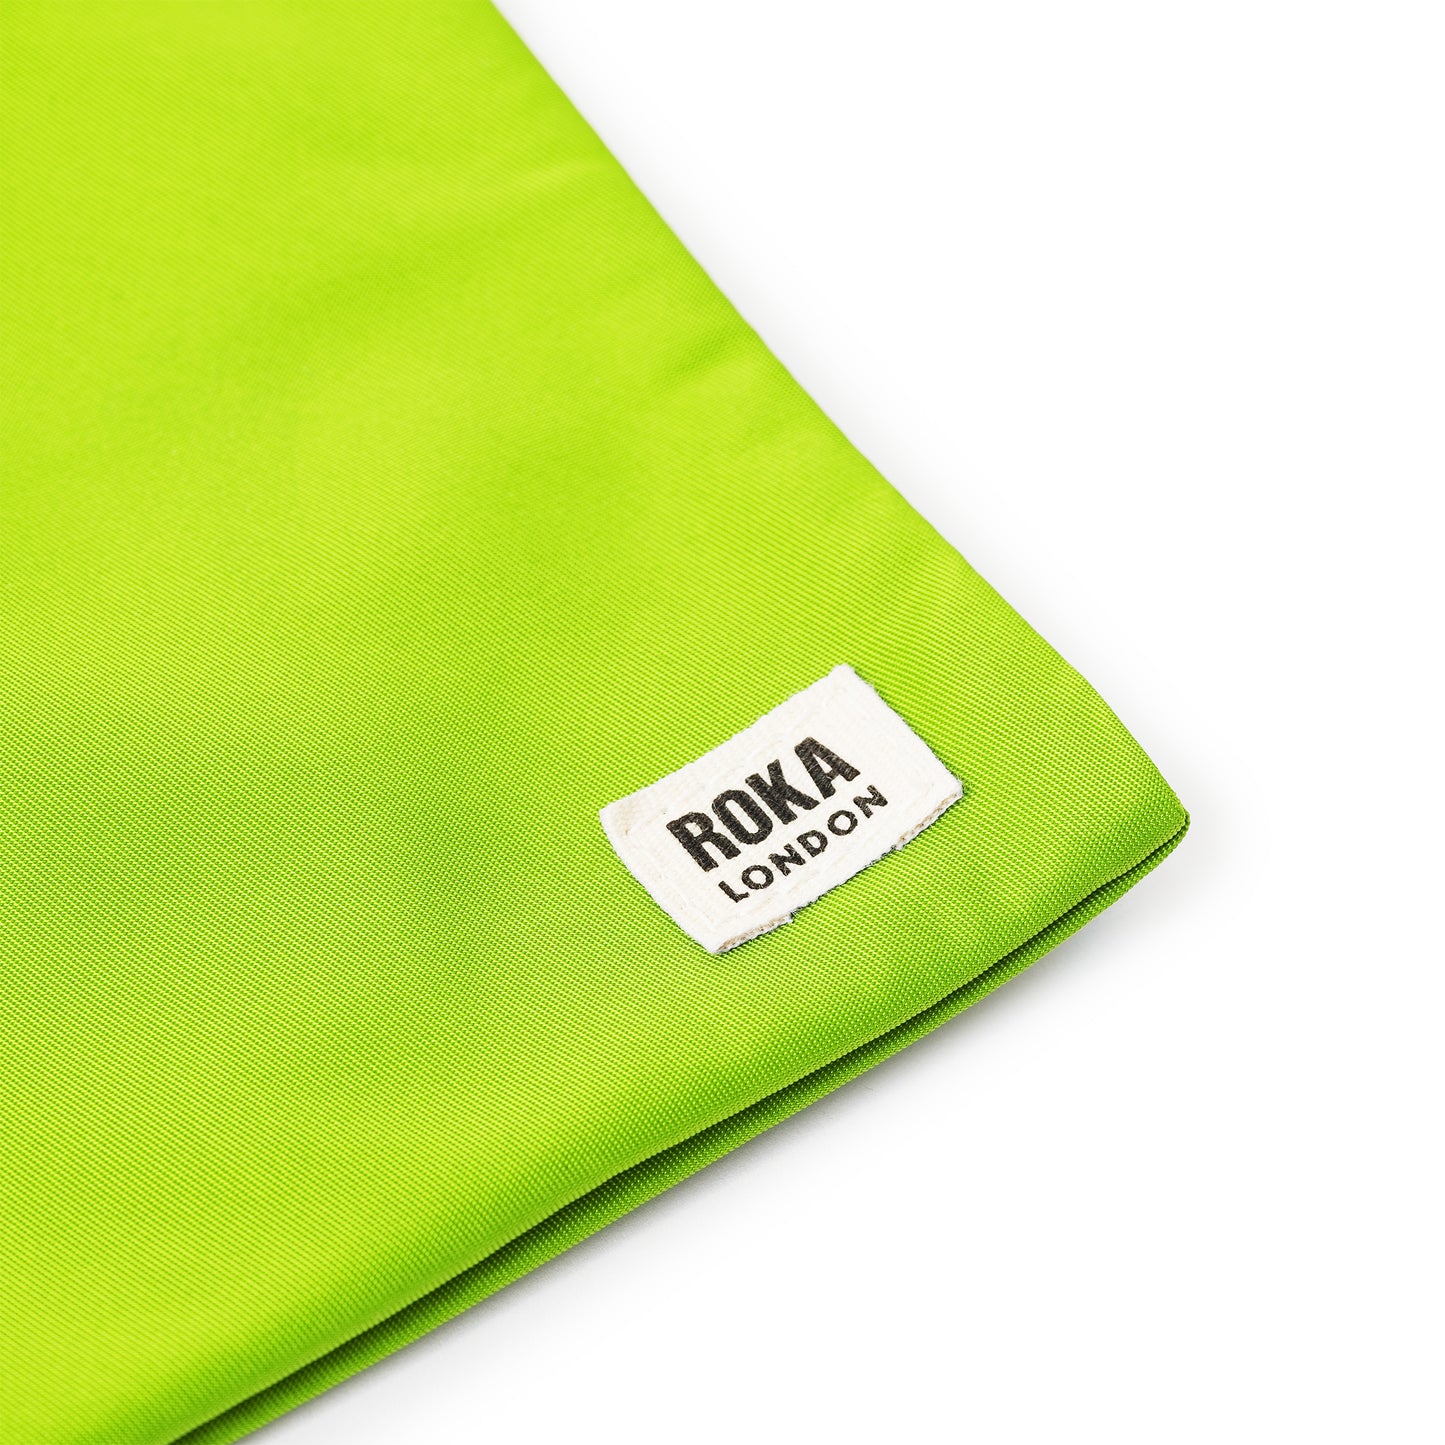 Roka London Chelsea Crossbody Phone Bag, Lime (Recycled Nylon)